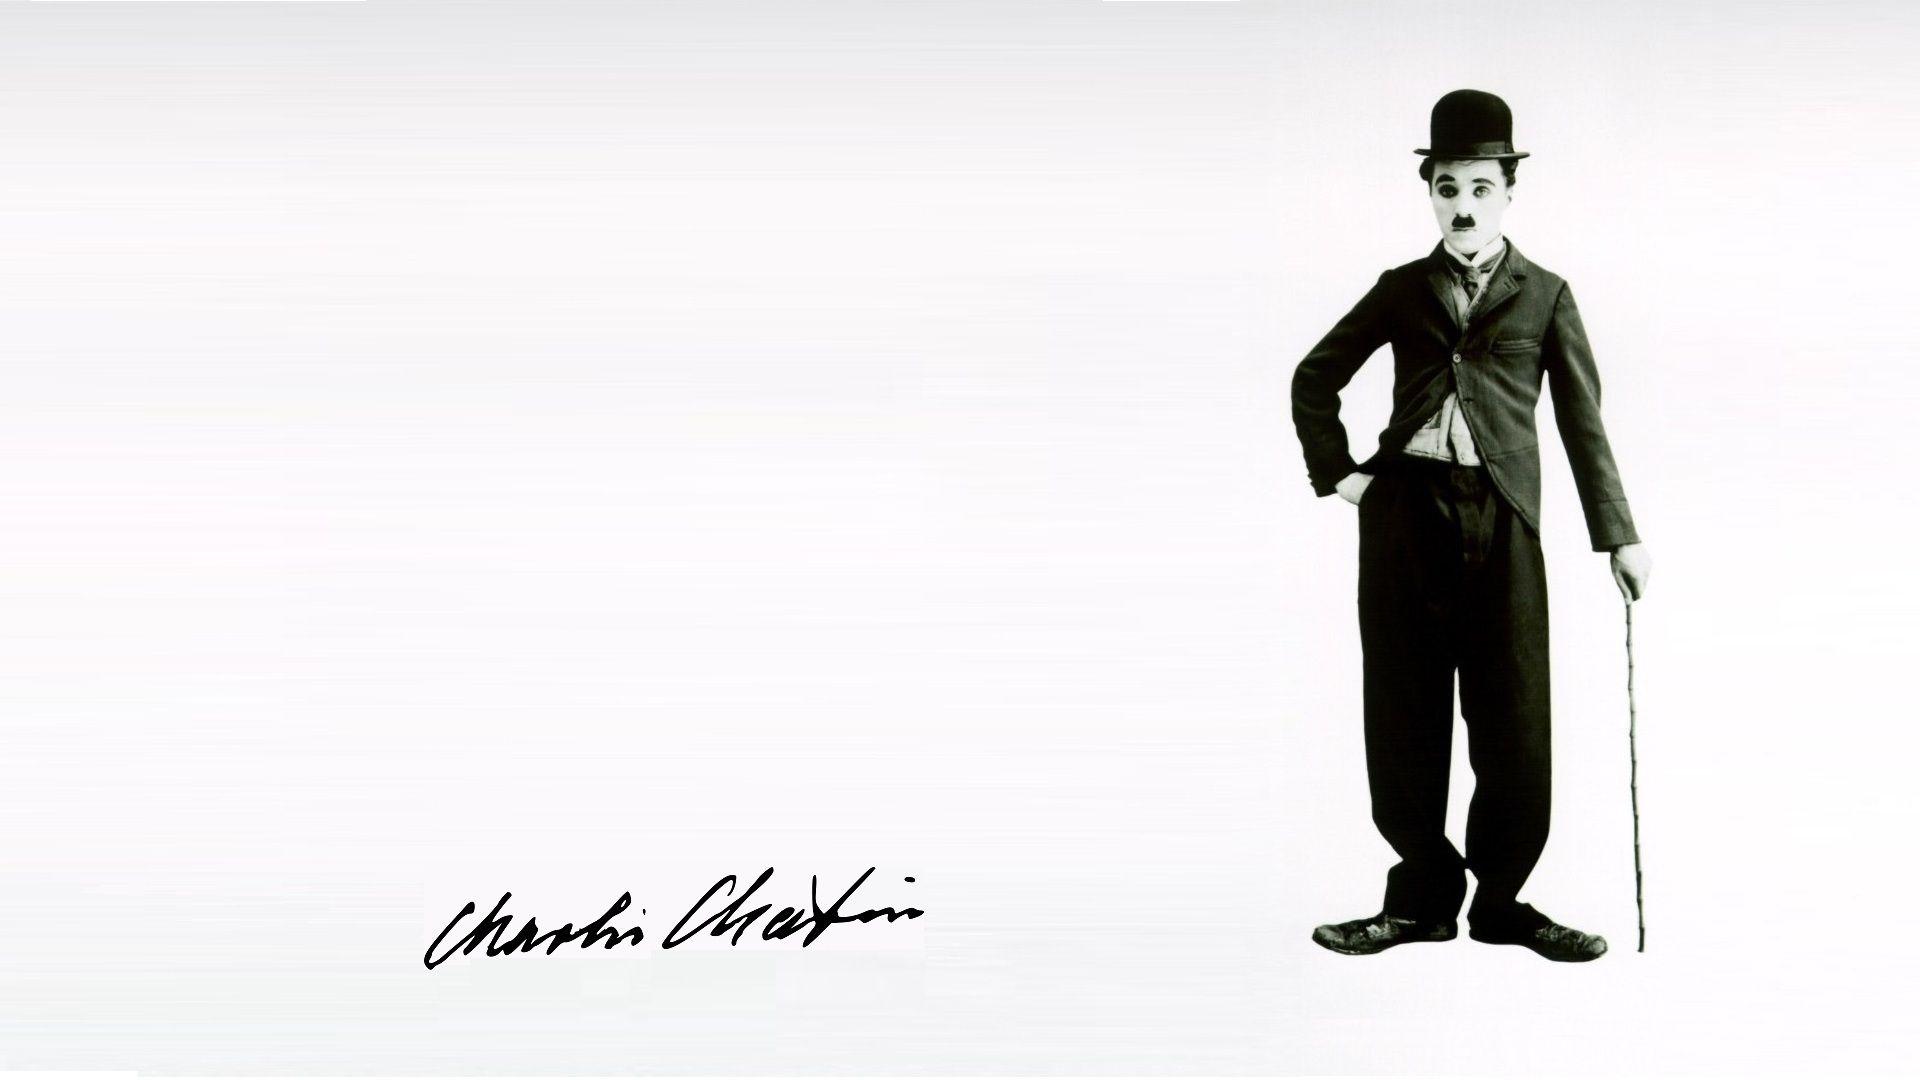 Charlie Chaplin Wallpapers HD Download